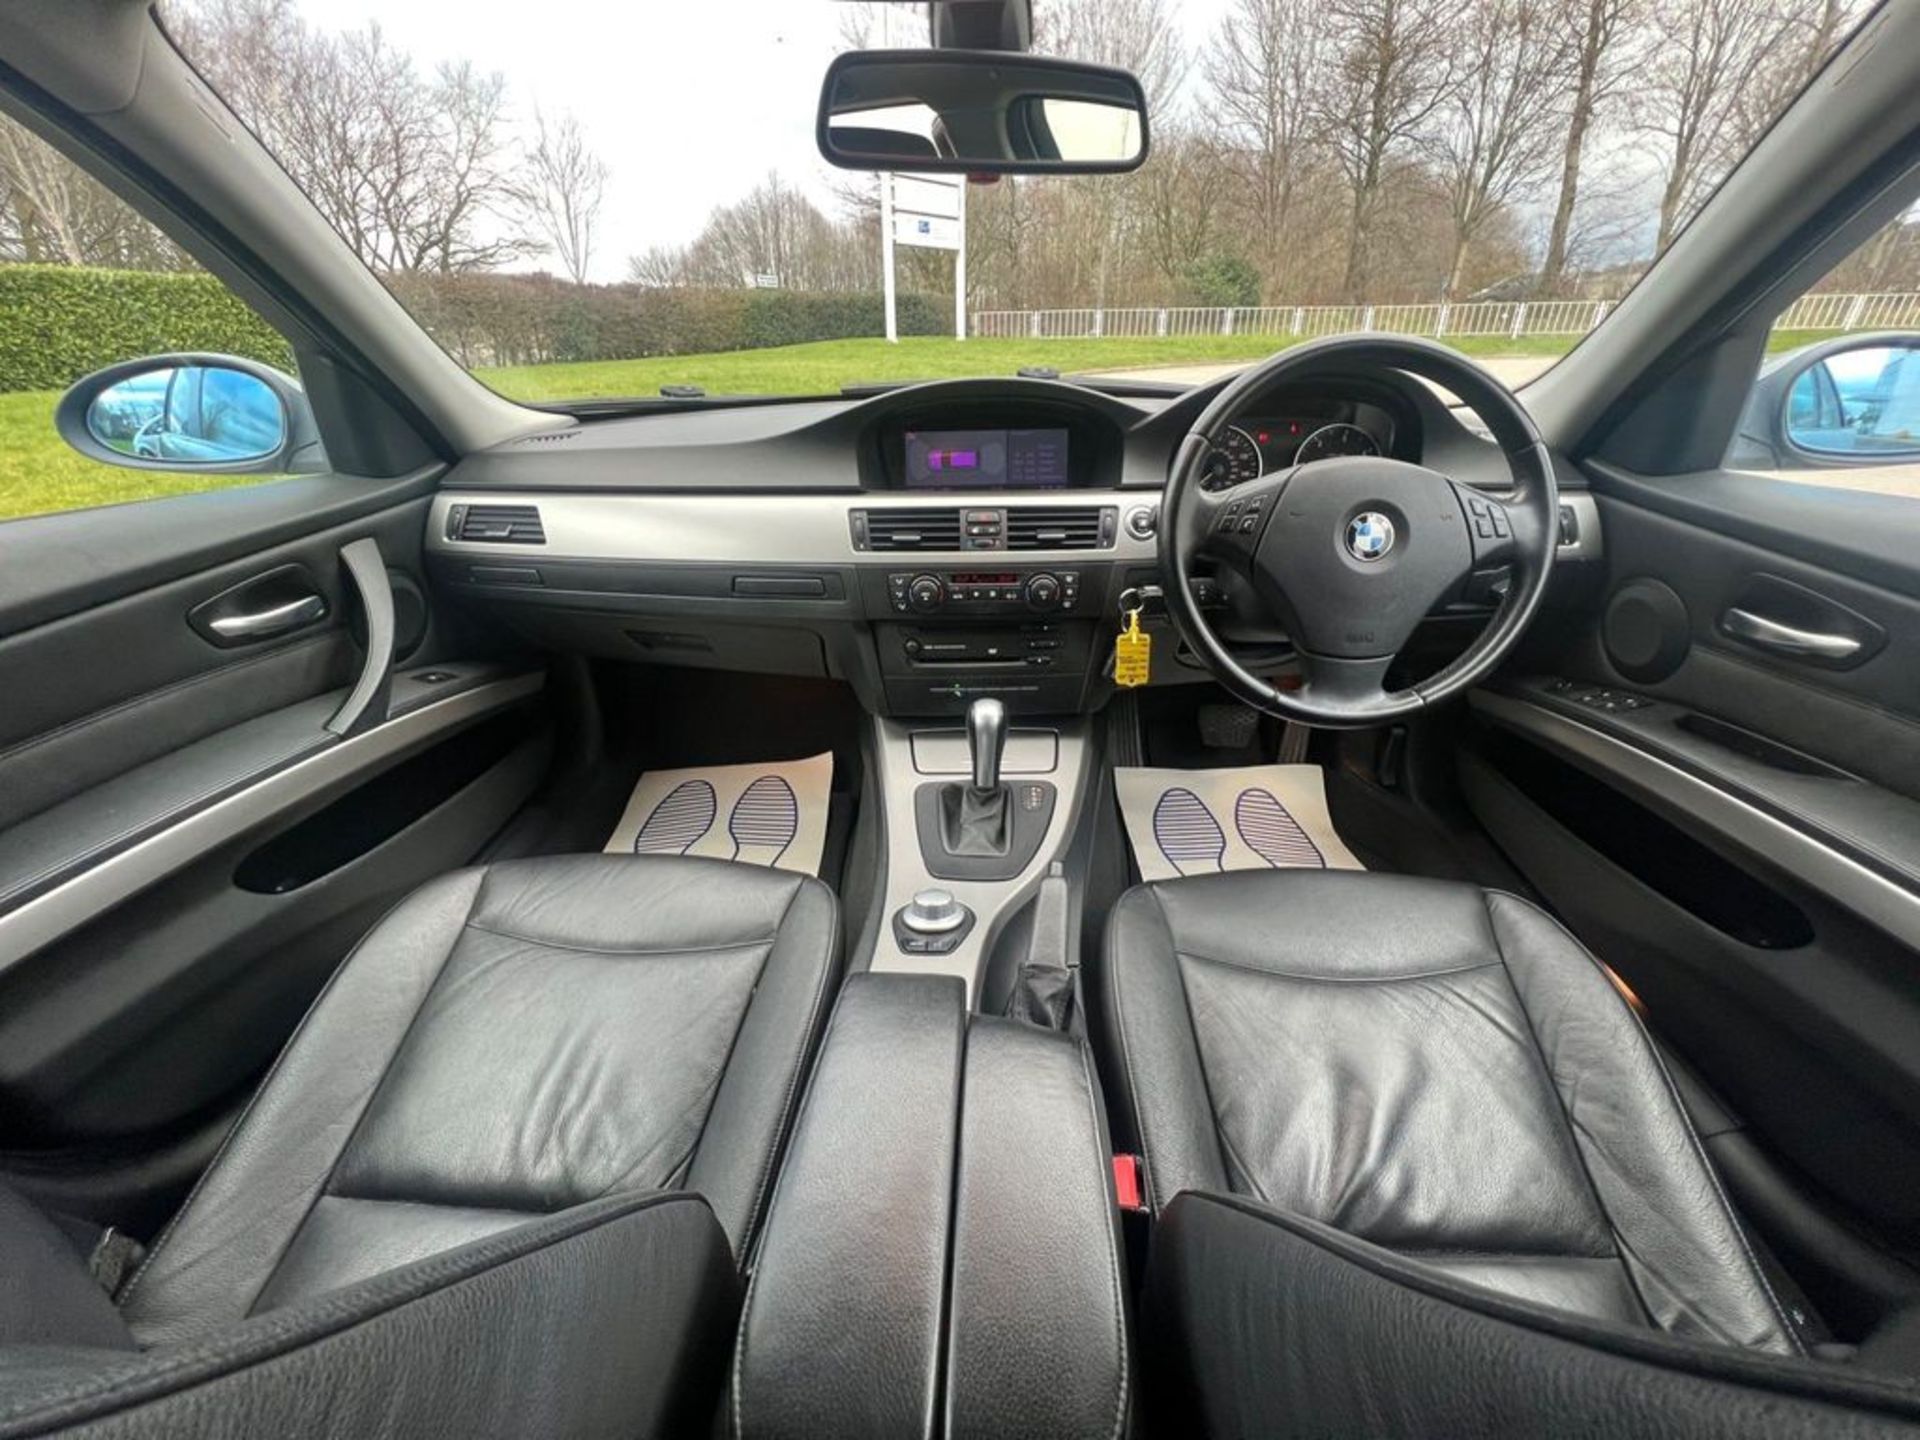 BMW 3 SERIES 2.0 320D SE TOURING AUTO EURO 4 5DR - Image 31 of 44